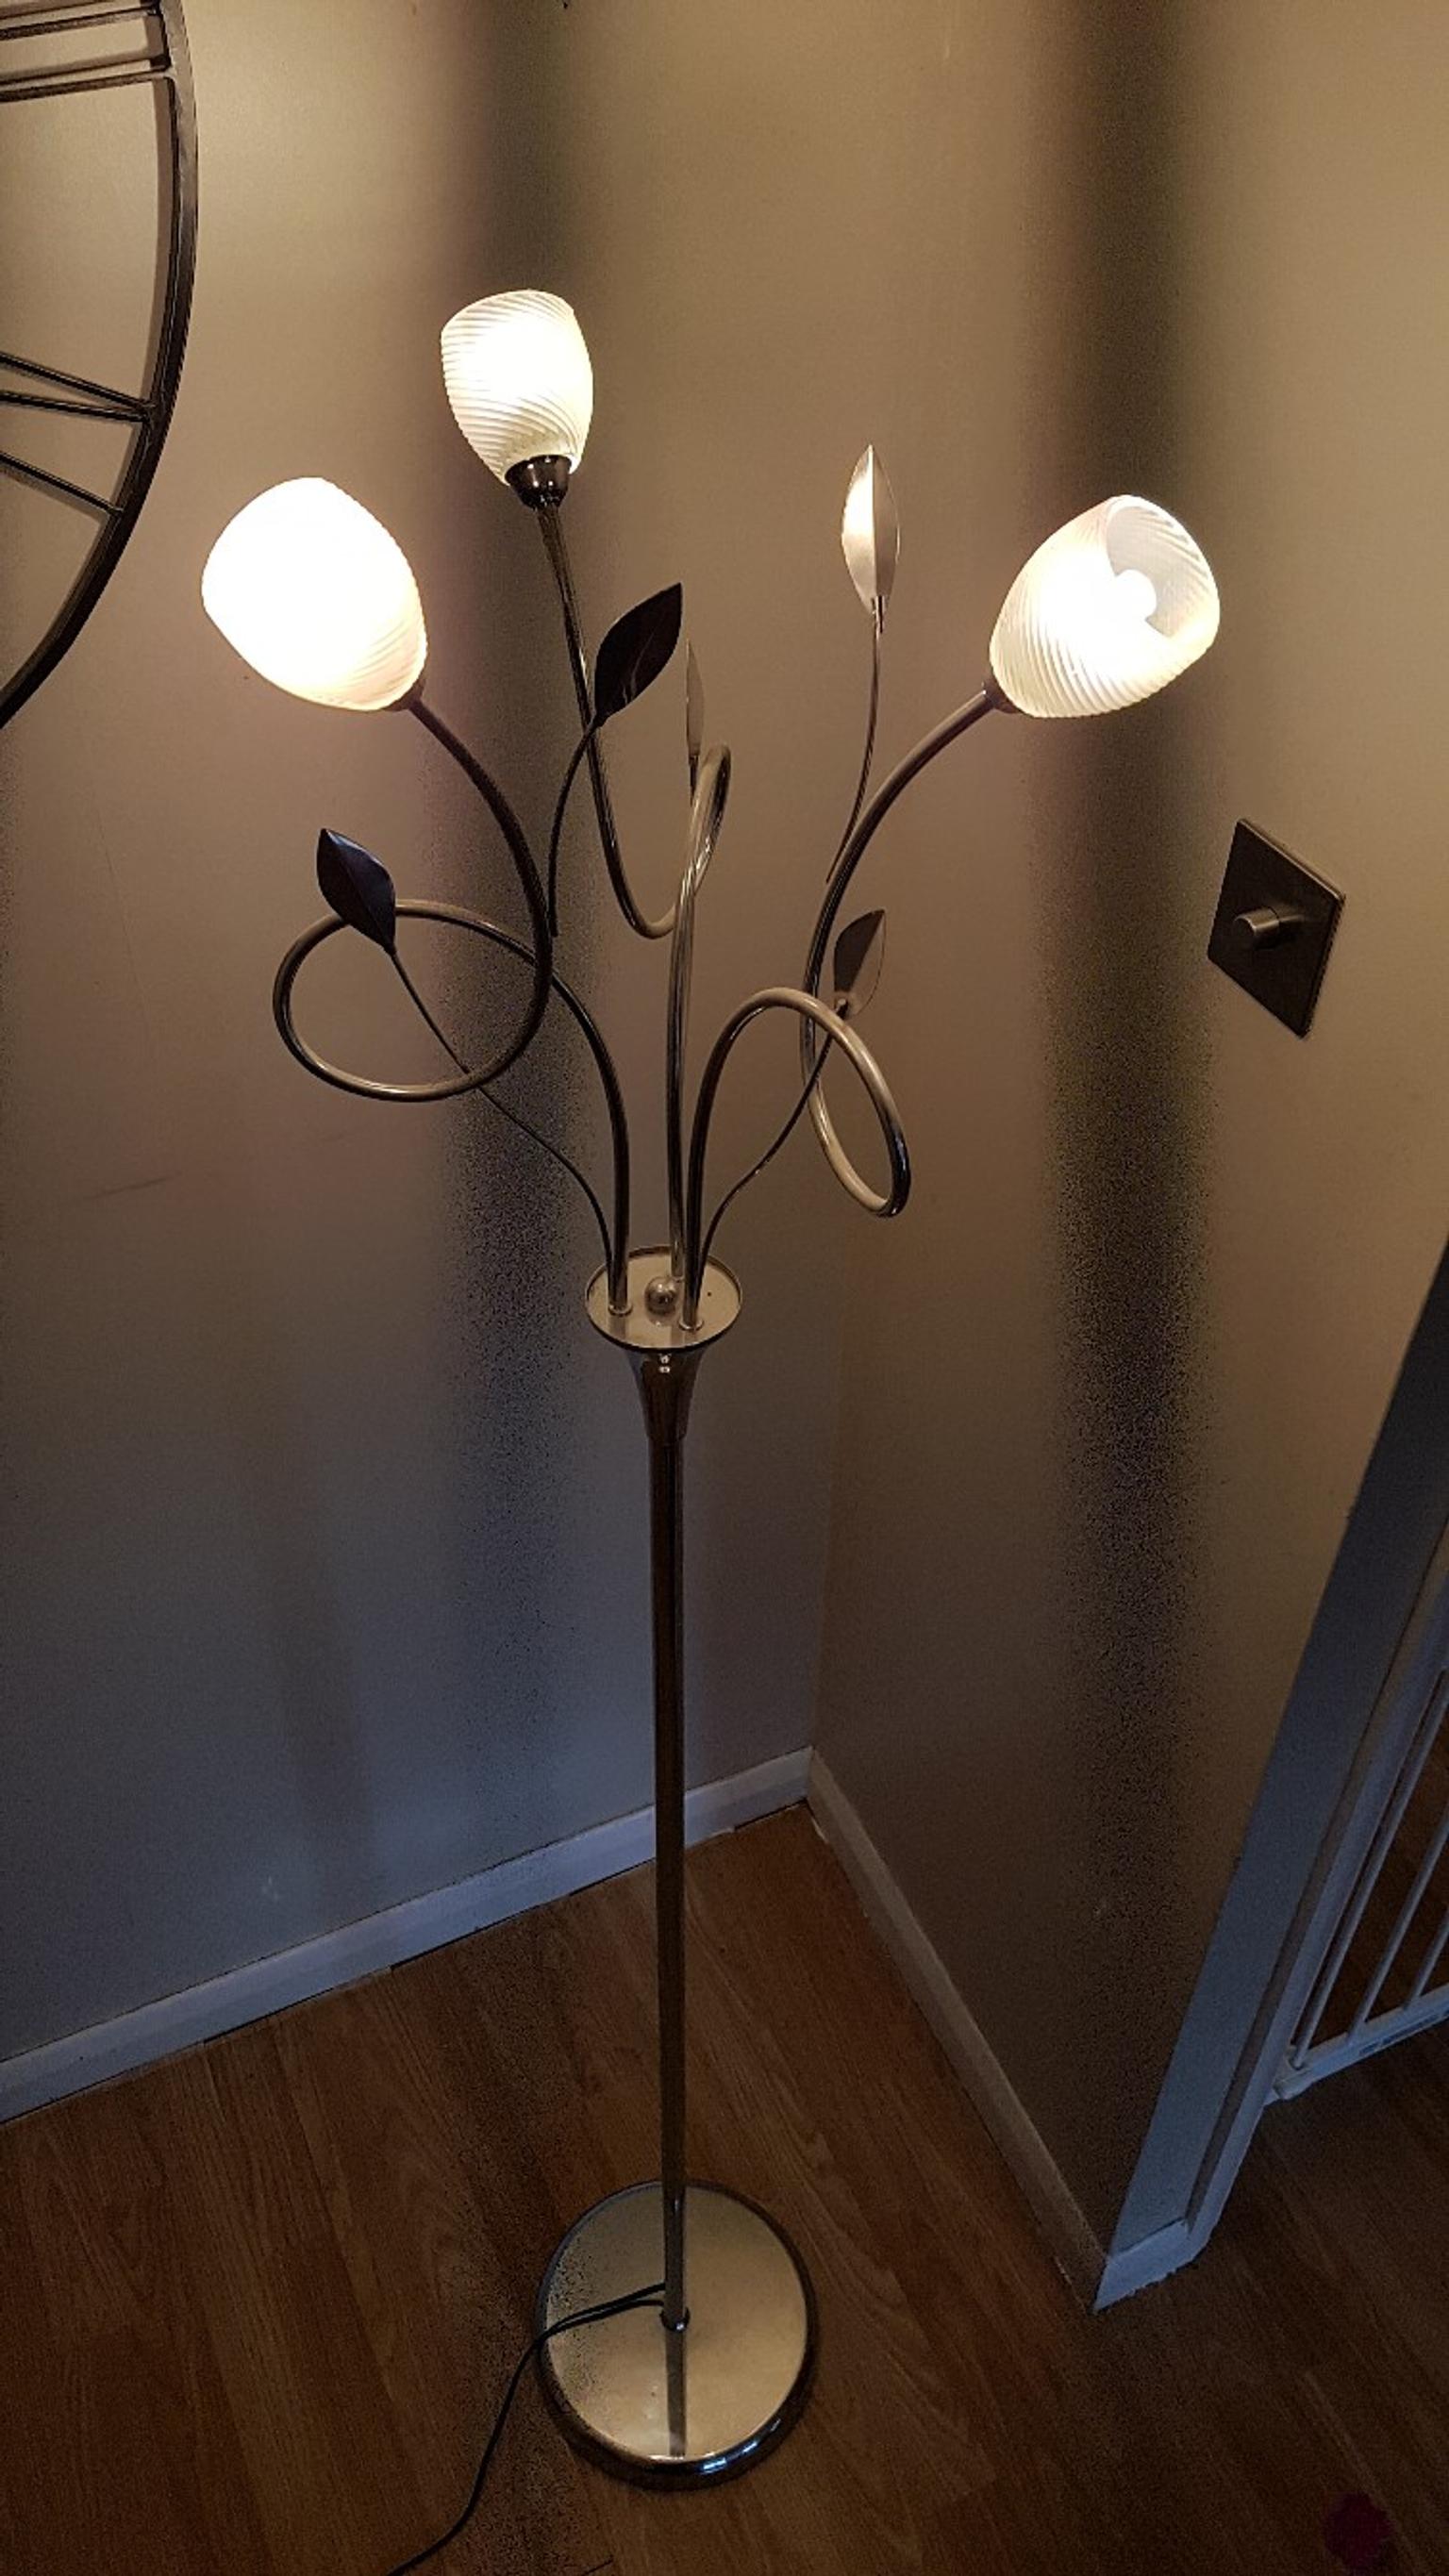 Dunelm Floor Lamp Swirl 3 Lights Led A In Cr0 Sutton Fur 50 00